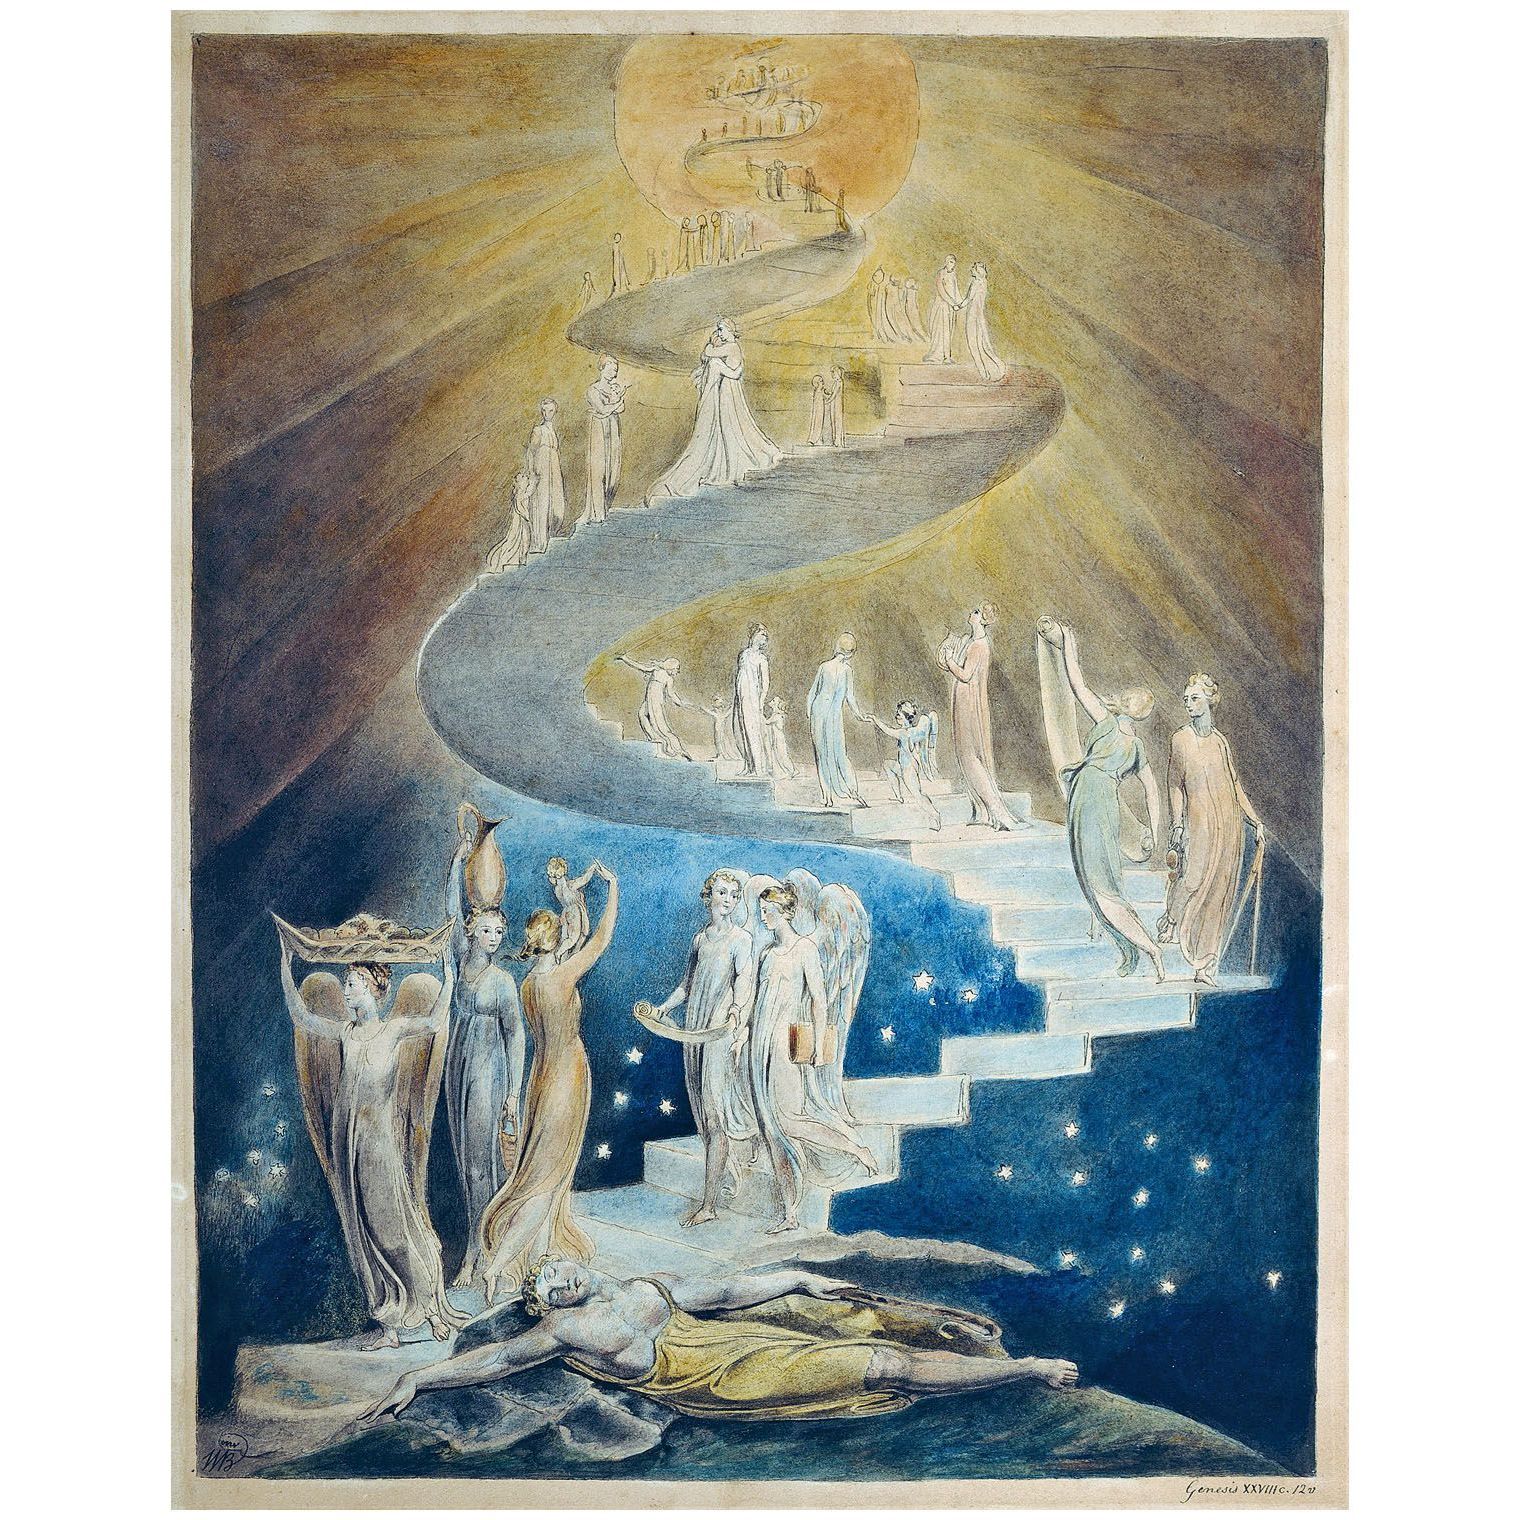 William Blake. Jacob’s Ladder. 1805. British Museum